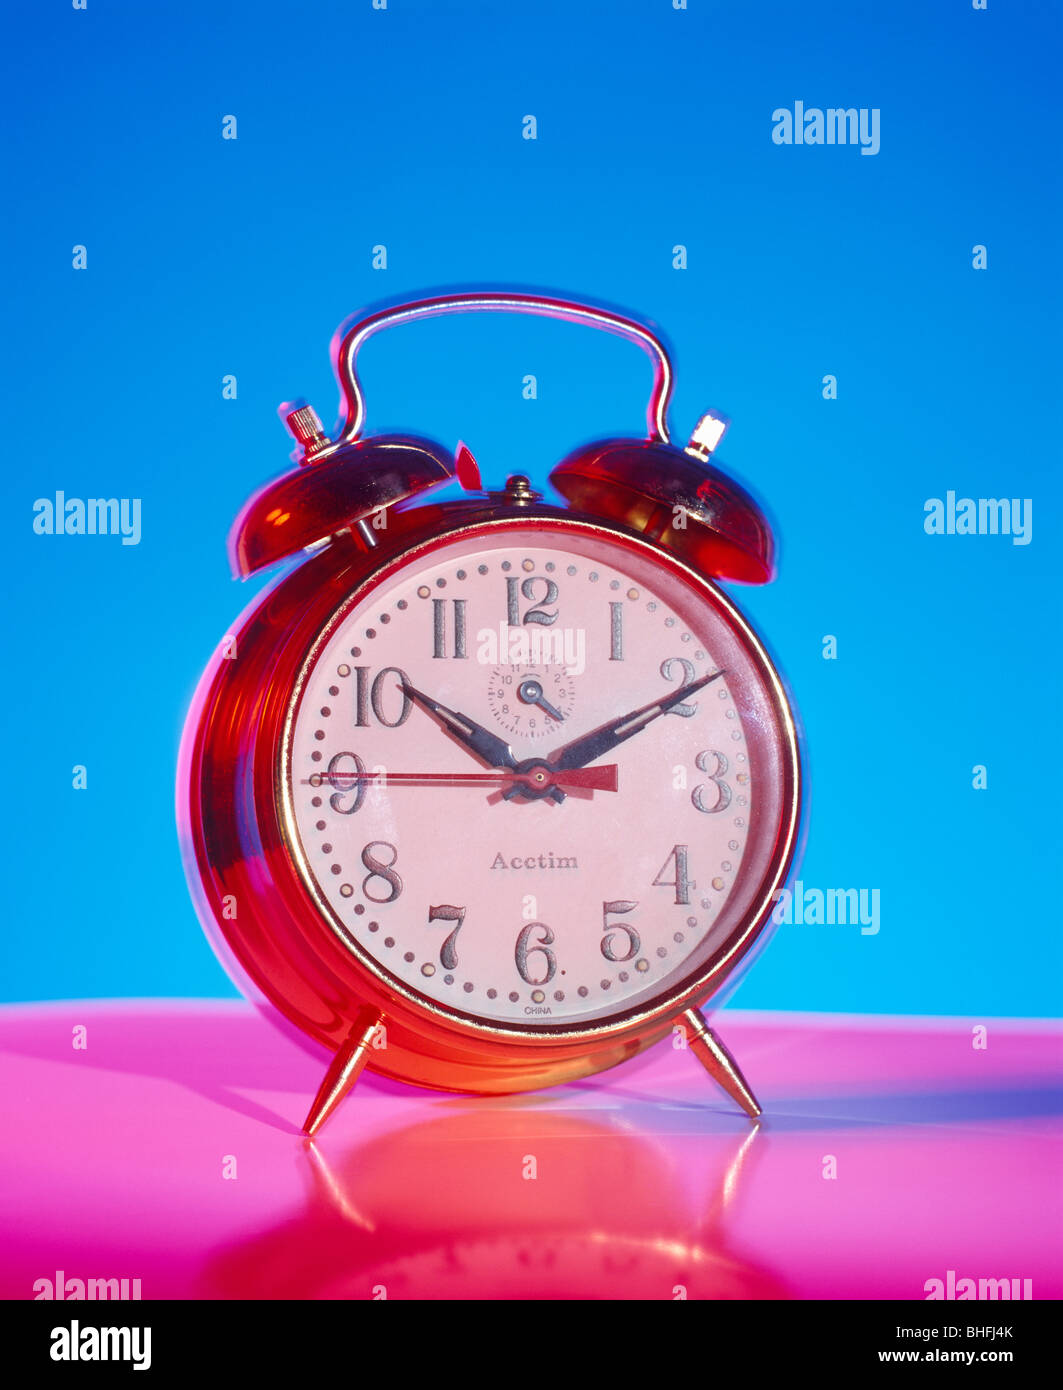 Alarm clock on pink base Stock Photo